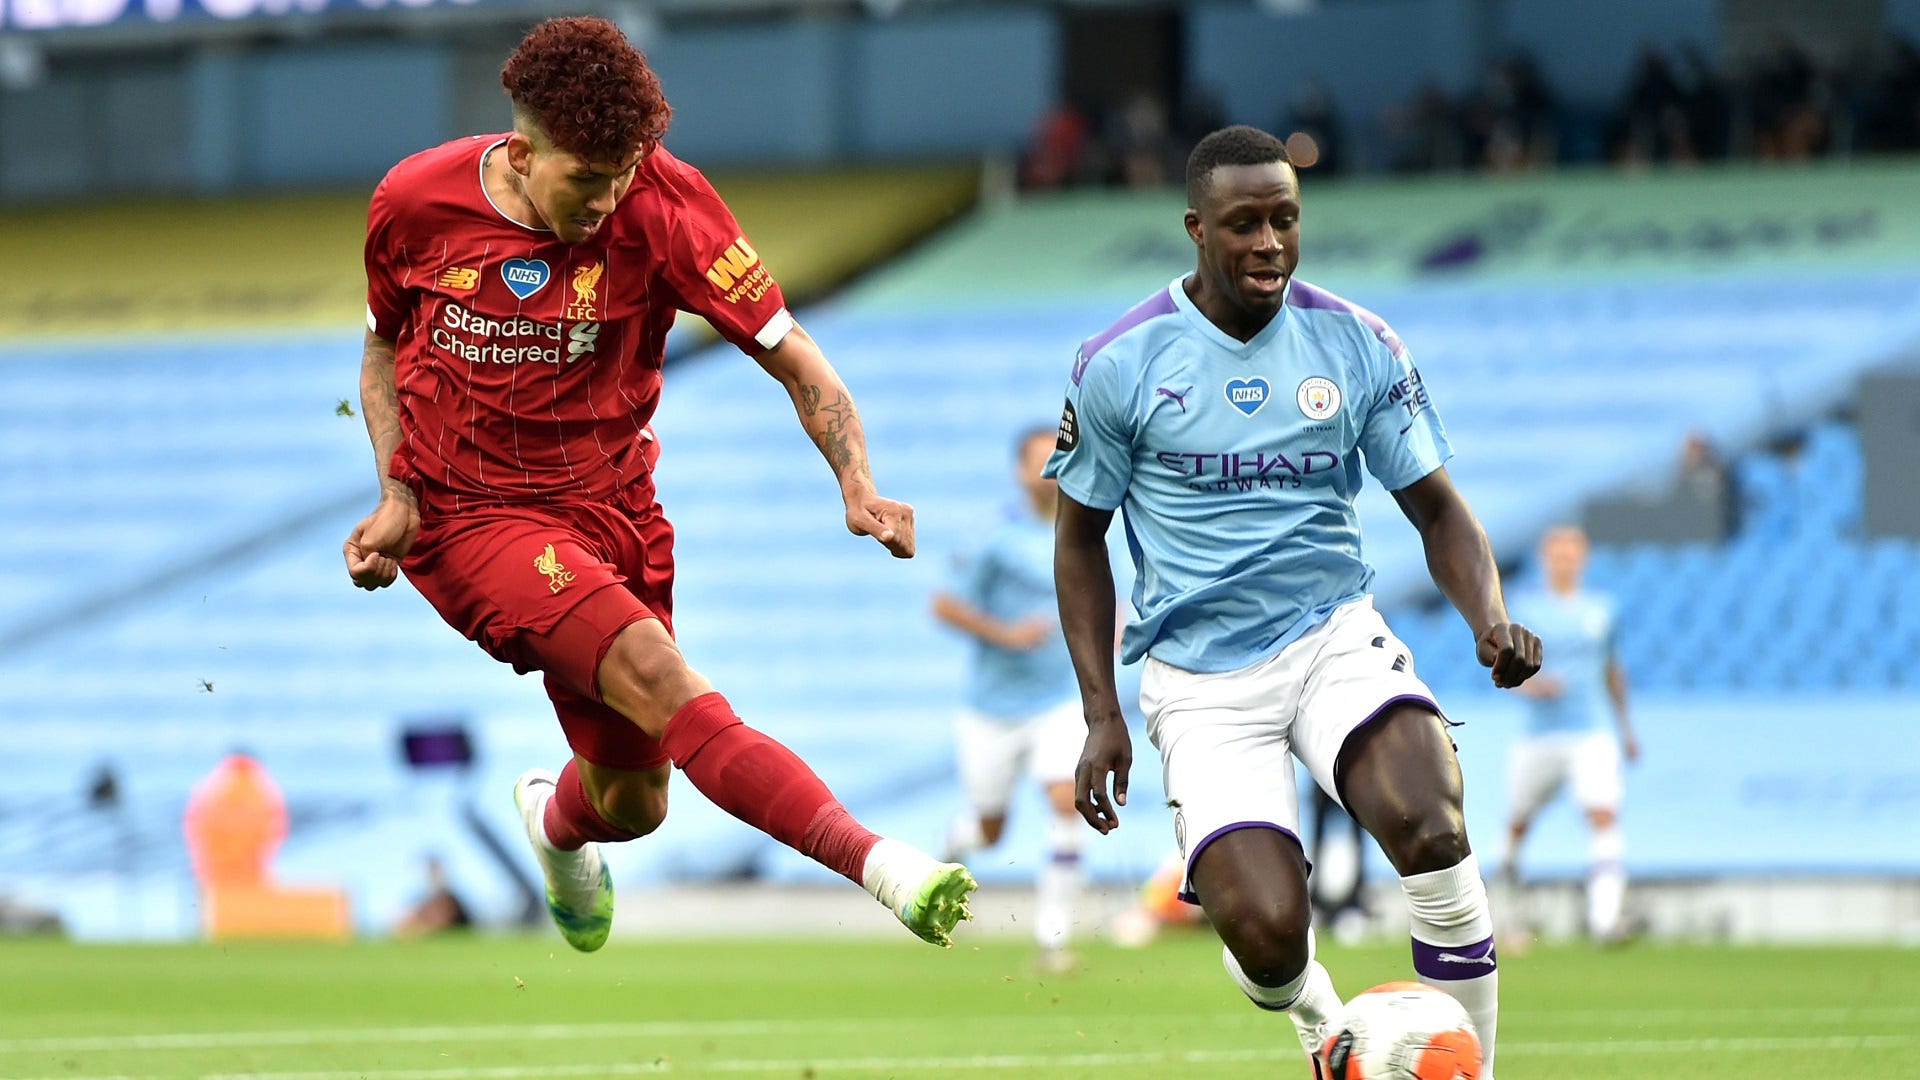 Roberto Firmino Manchester City vs Liverpool Premier League 2019-20